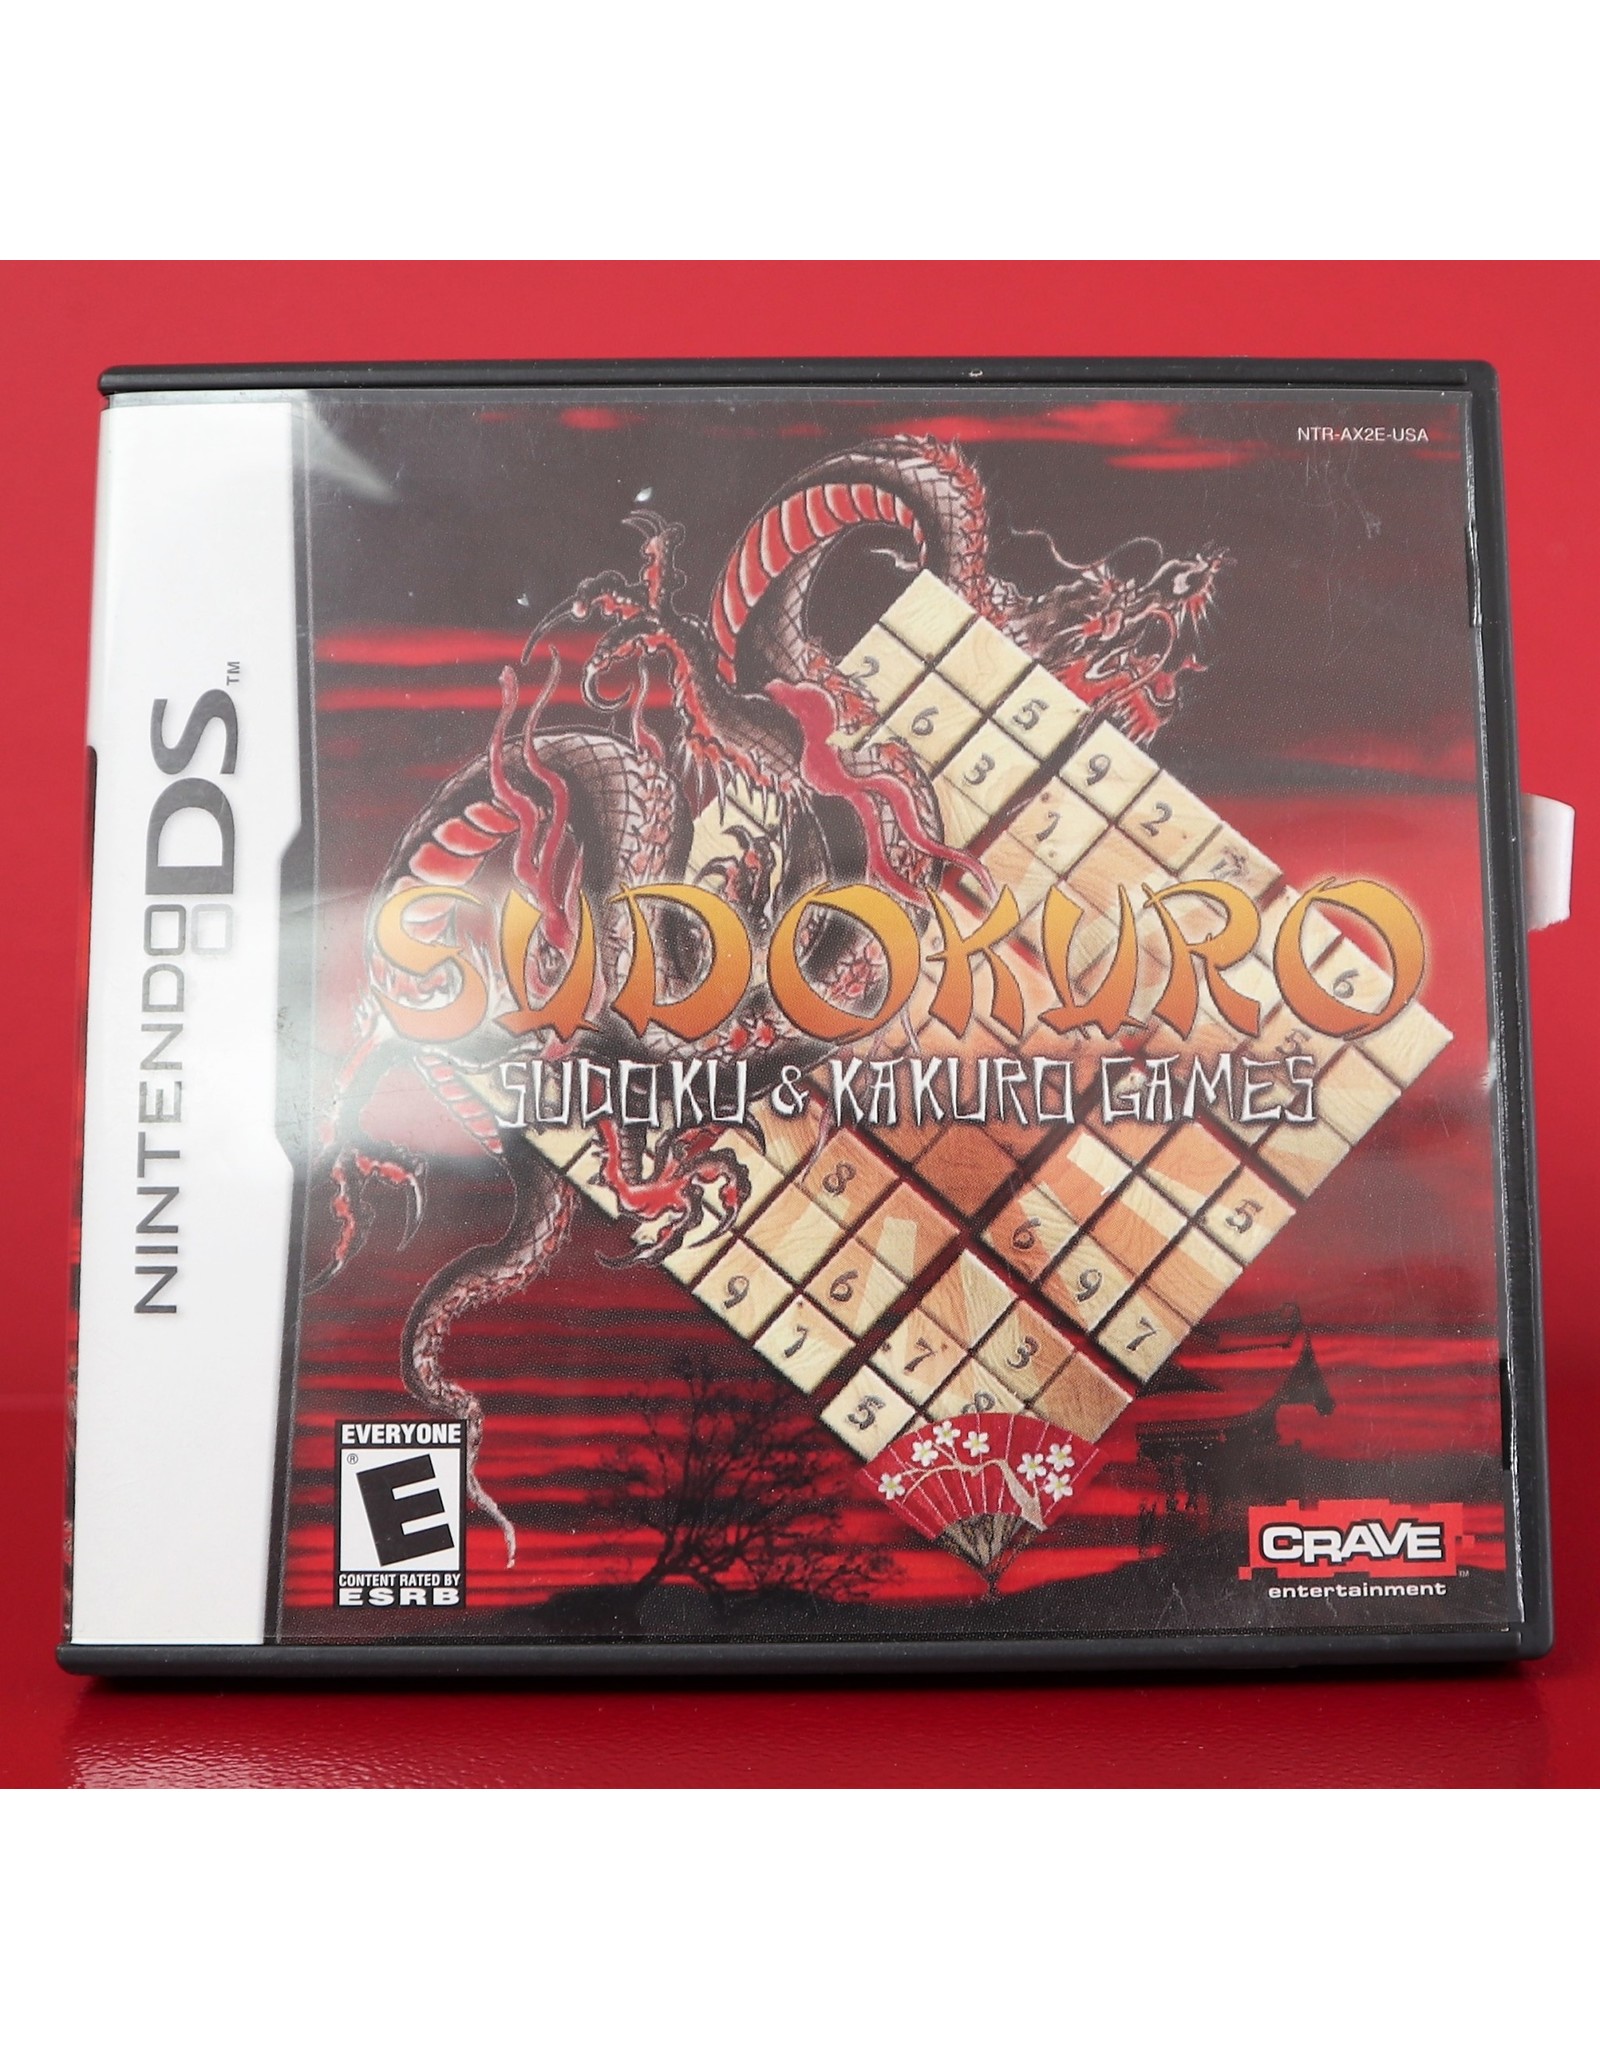 Used Game - Nintendo DS - Sudokuro [CIB]